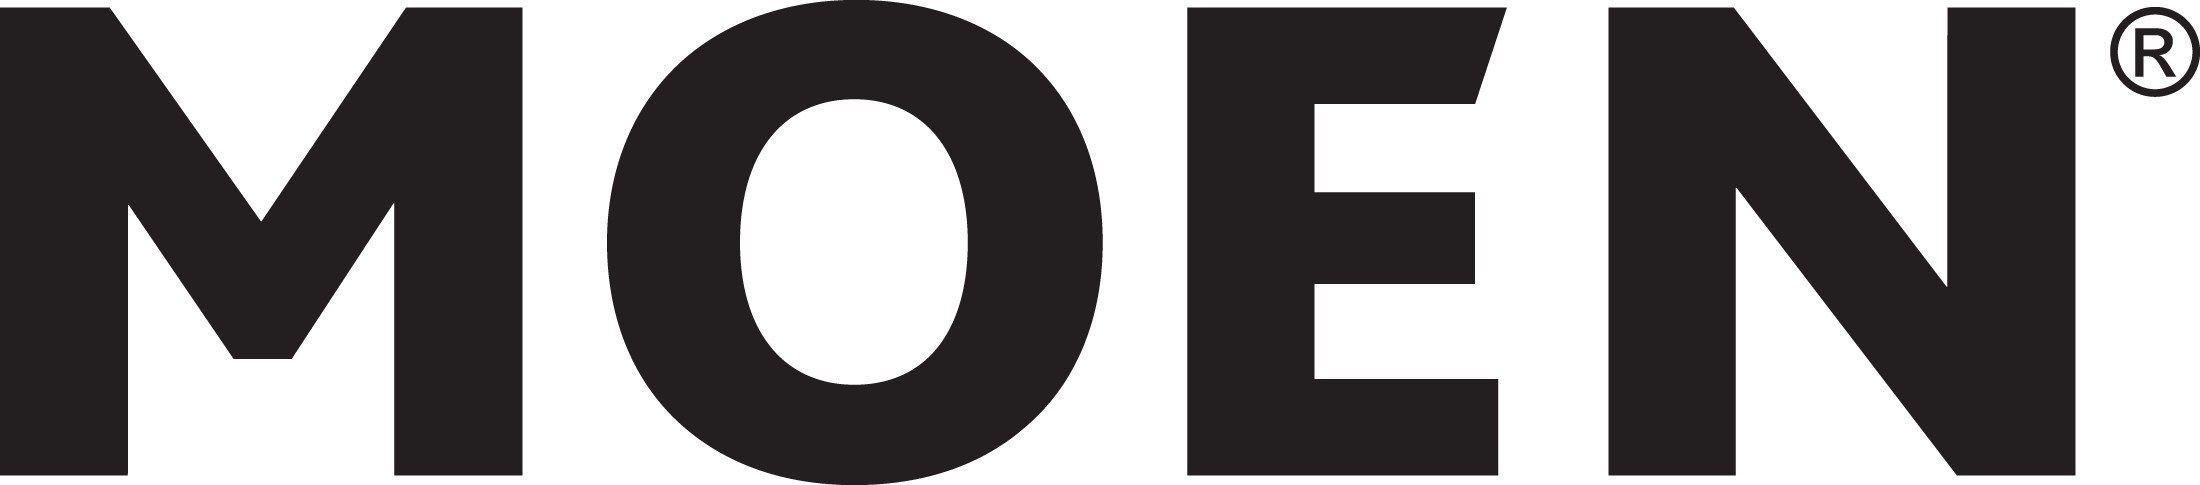 Moen Logo - Moen Inspires Consumers and Designers at New Design Center